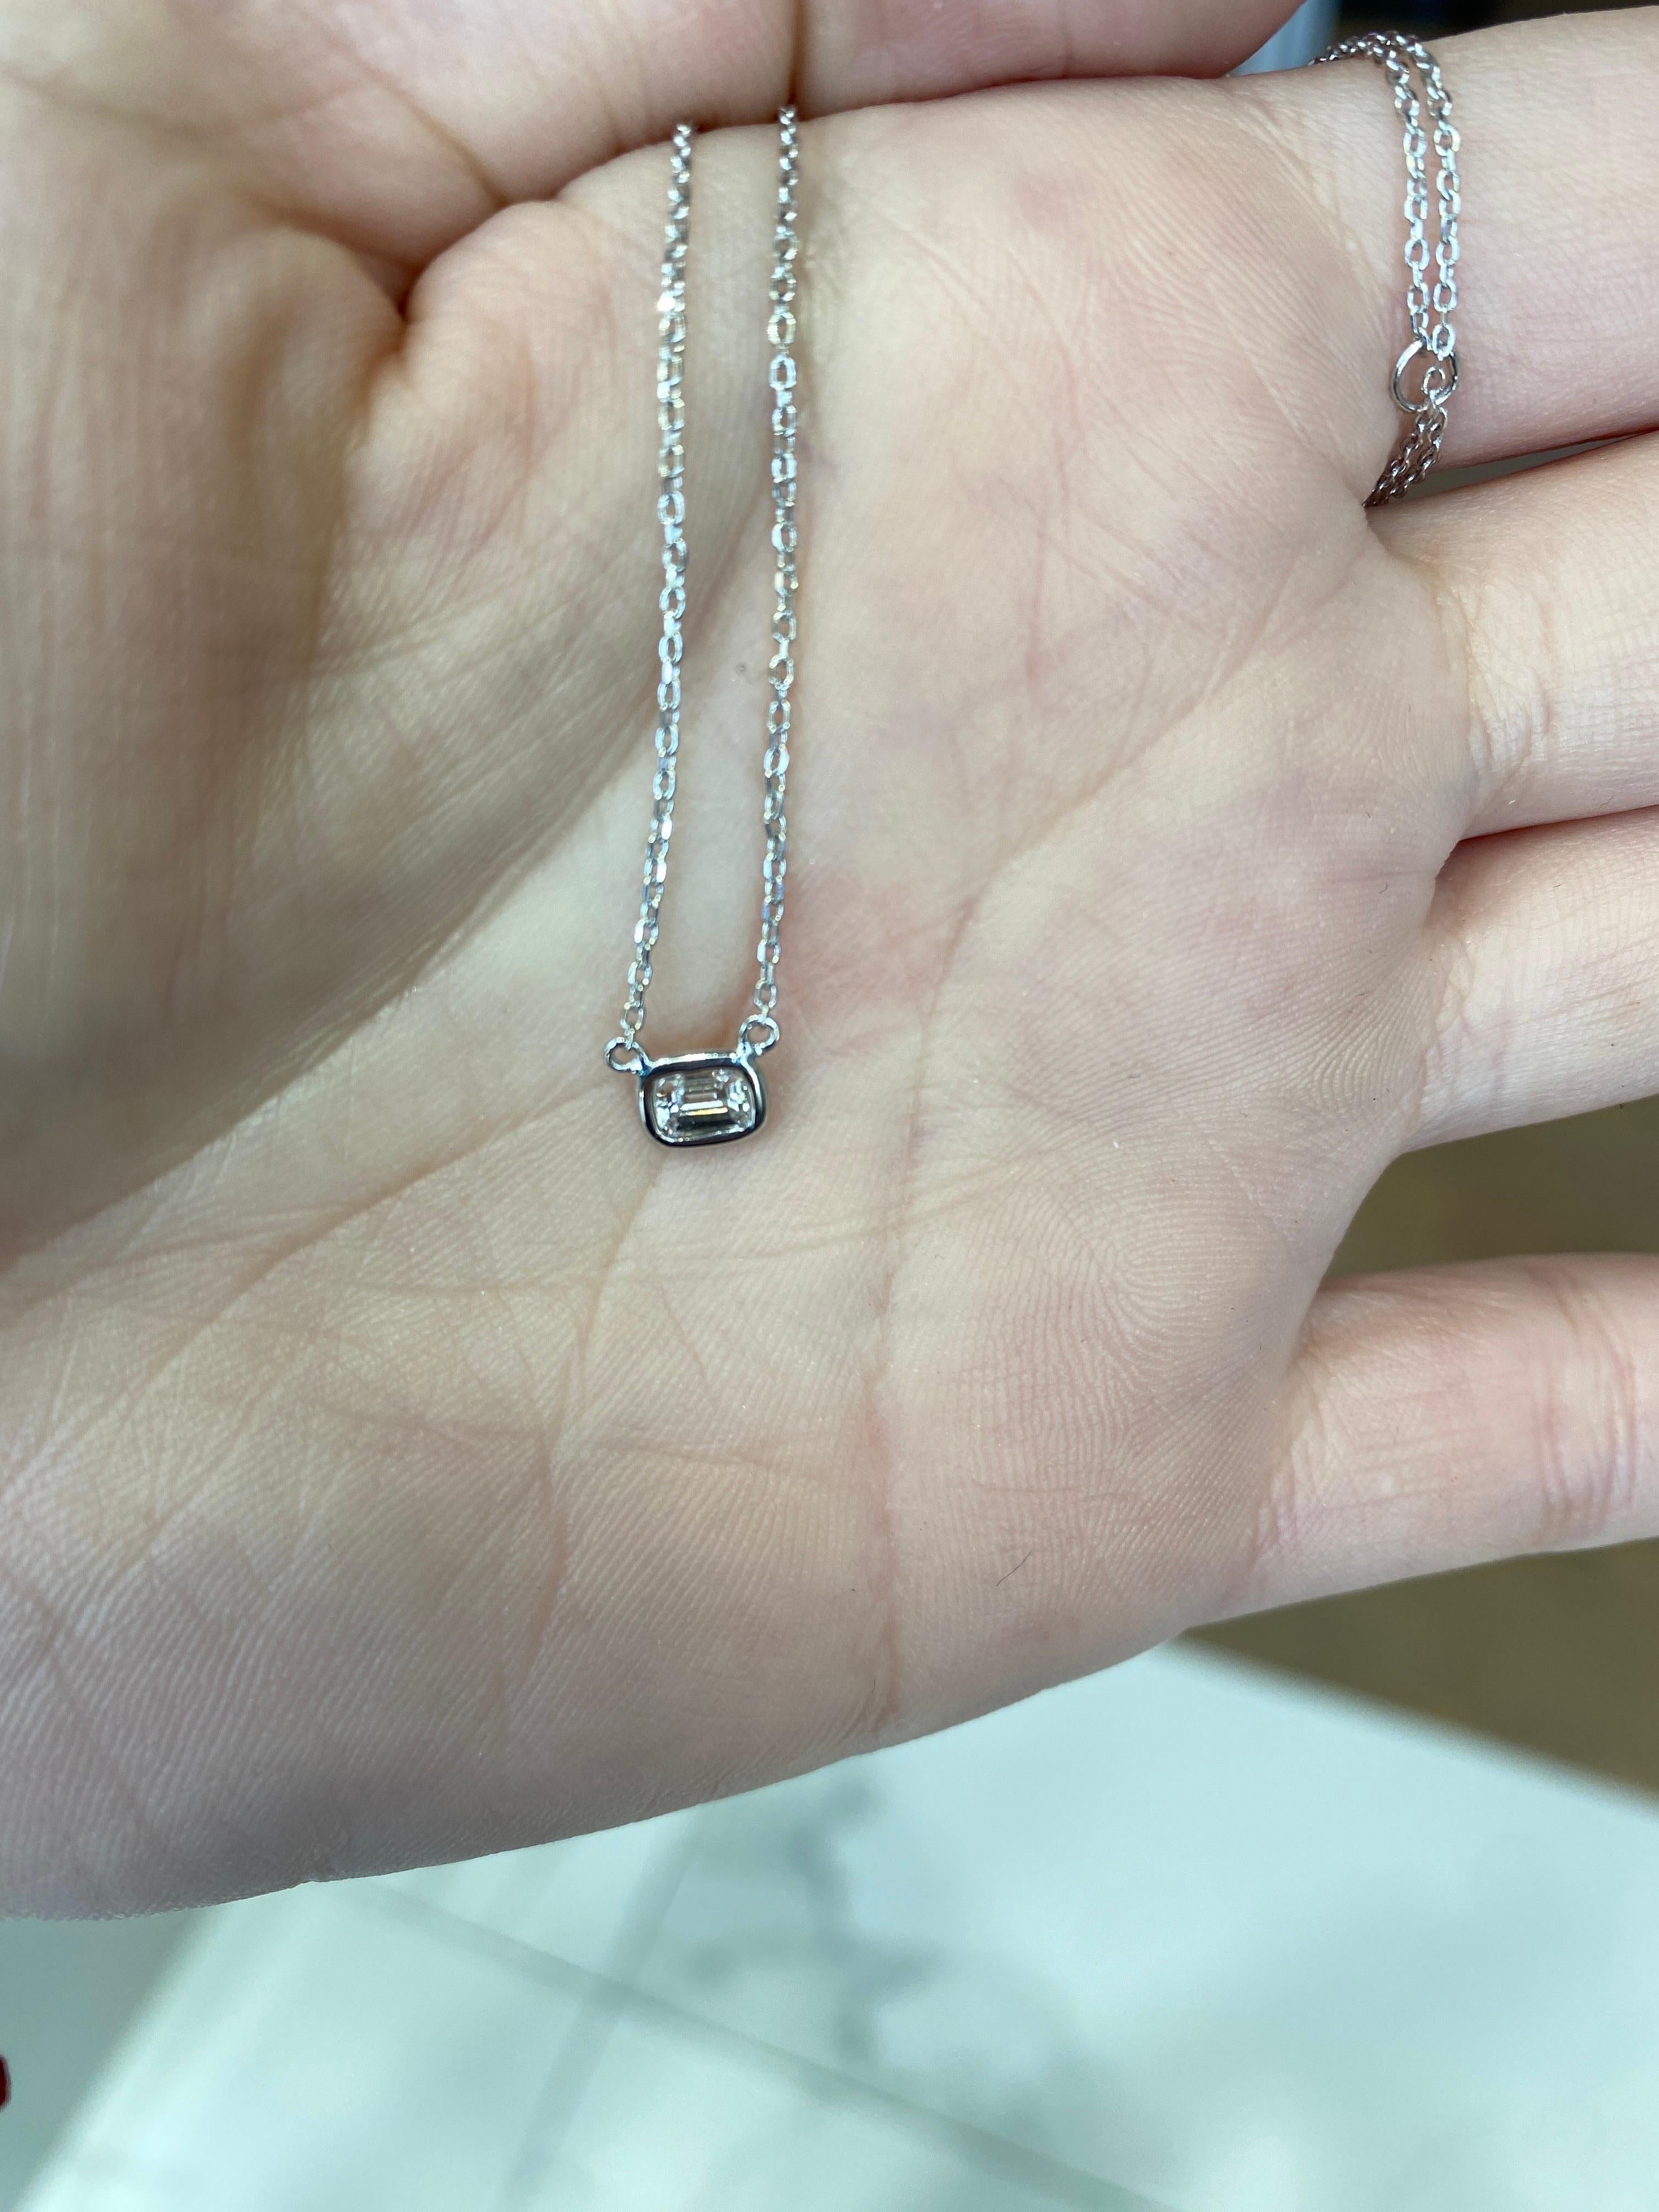 14k White Gold 0.23 Carat Natural Emerald Cut Diamond Pendant Necklace  For Sale 2